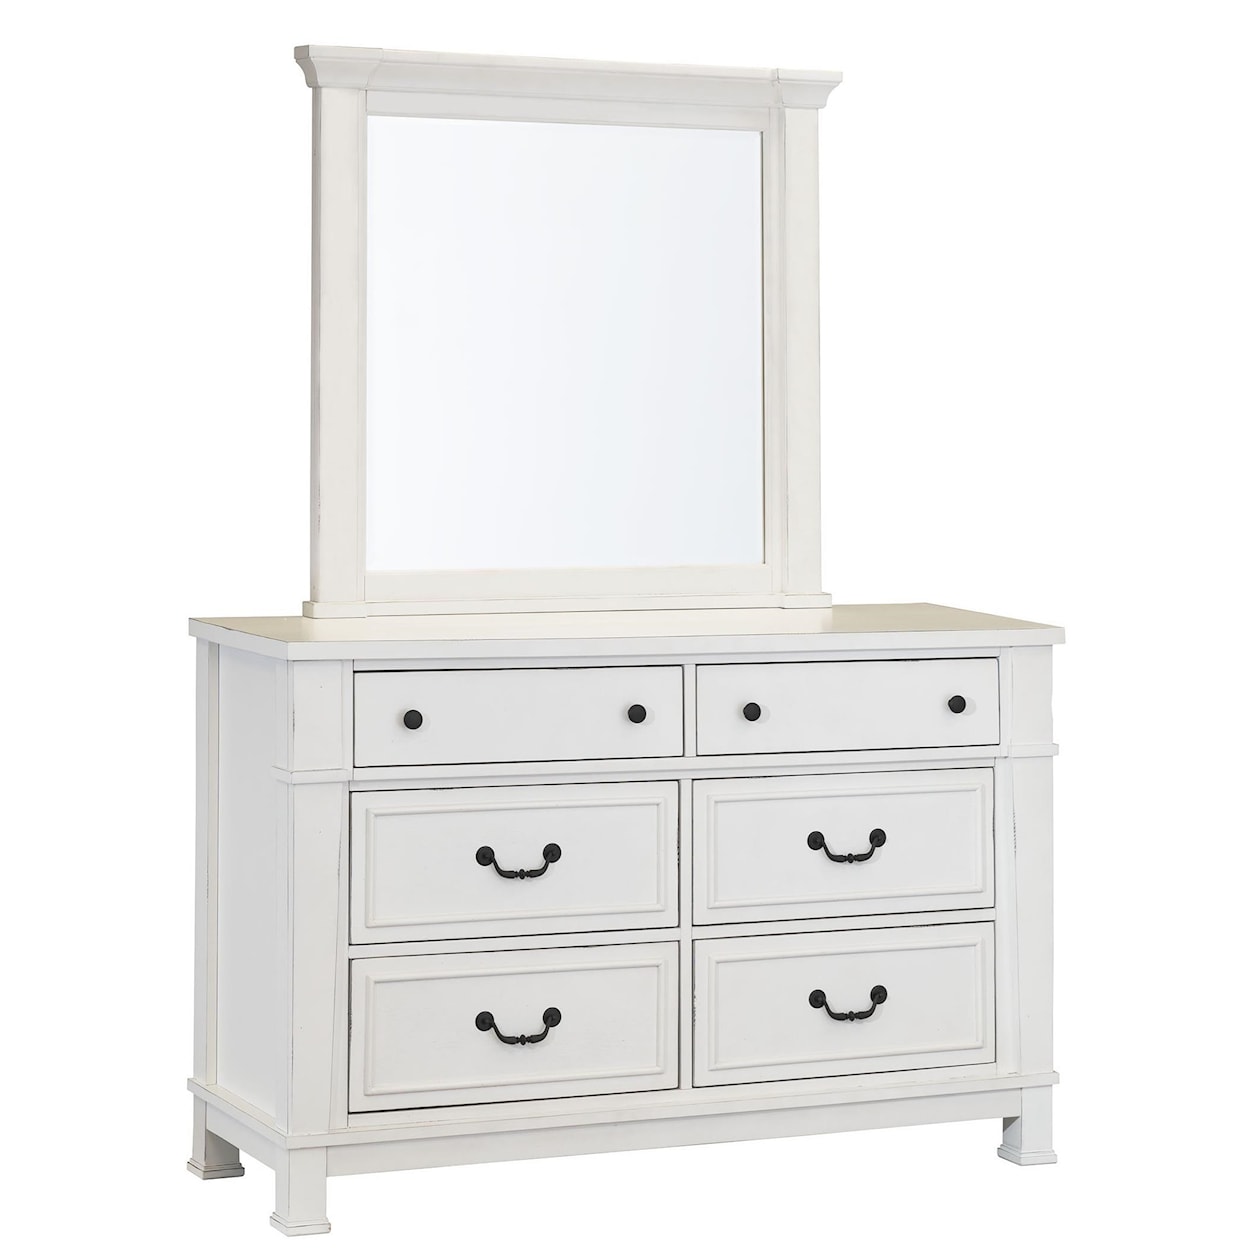 Standard Furniture Chesapeake Bay Youth Dresser and Mirror Set